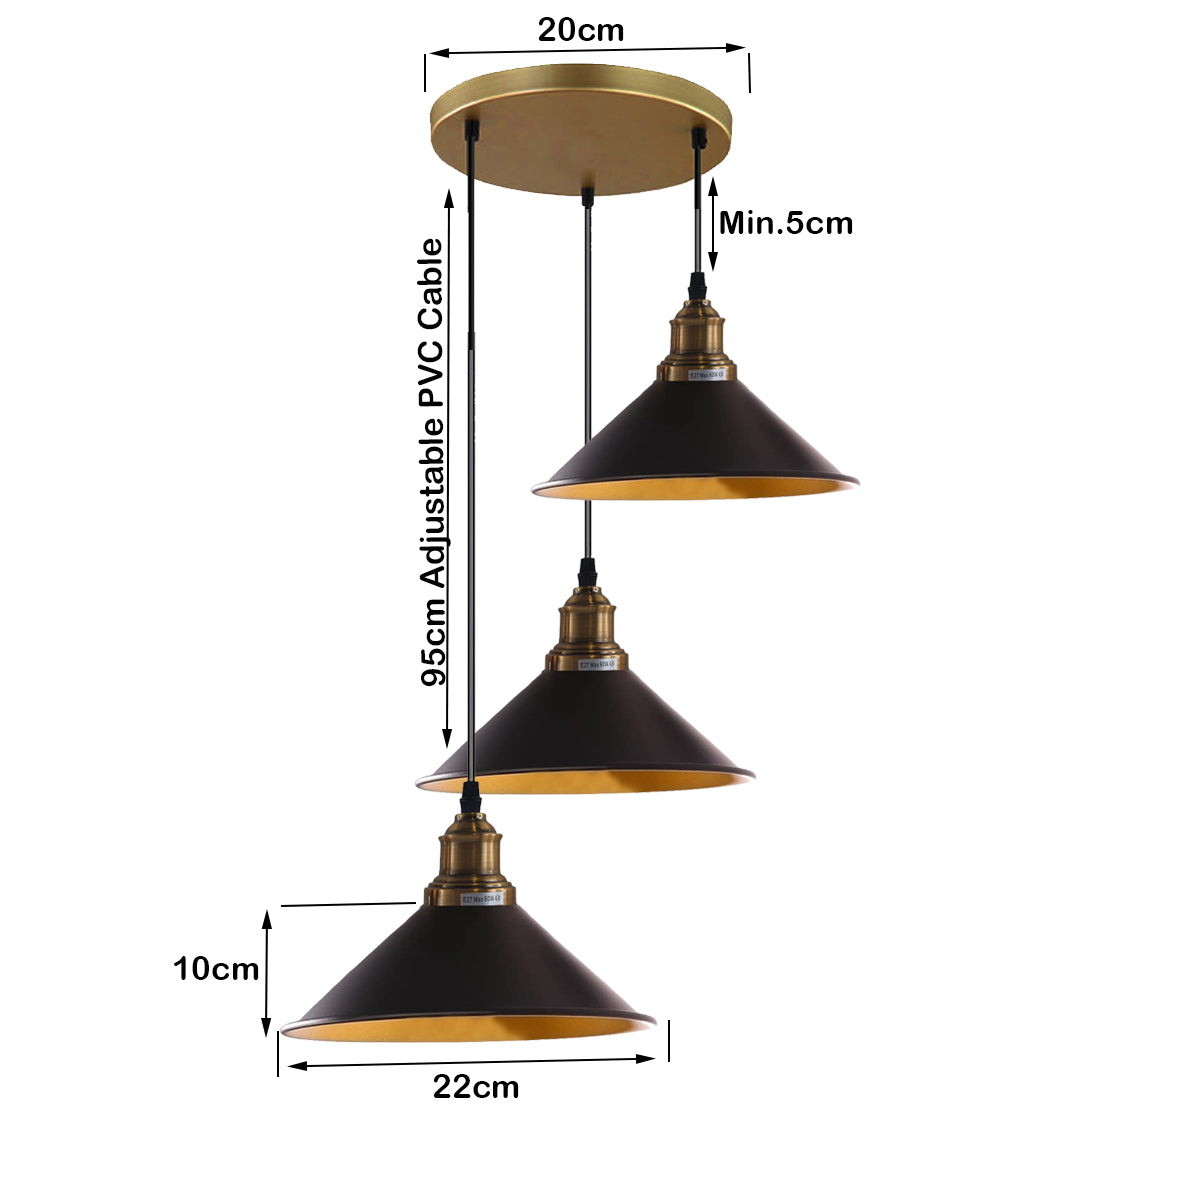 3 Lights Hanging Chandelier With Adjustable Cable With Black Shade~1518 - LEDSone UK Ltd